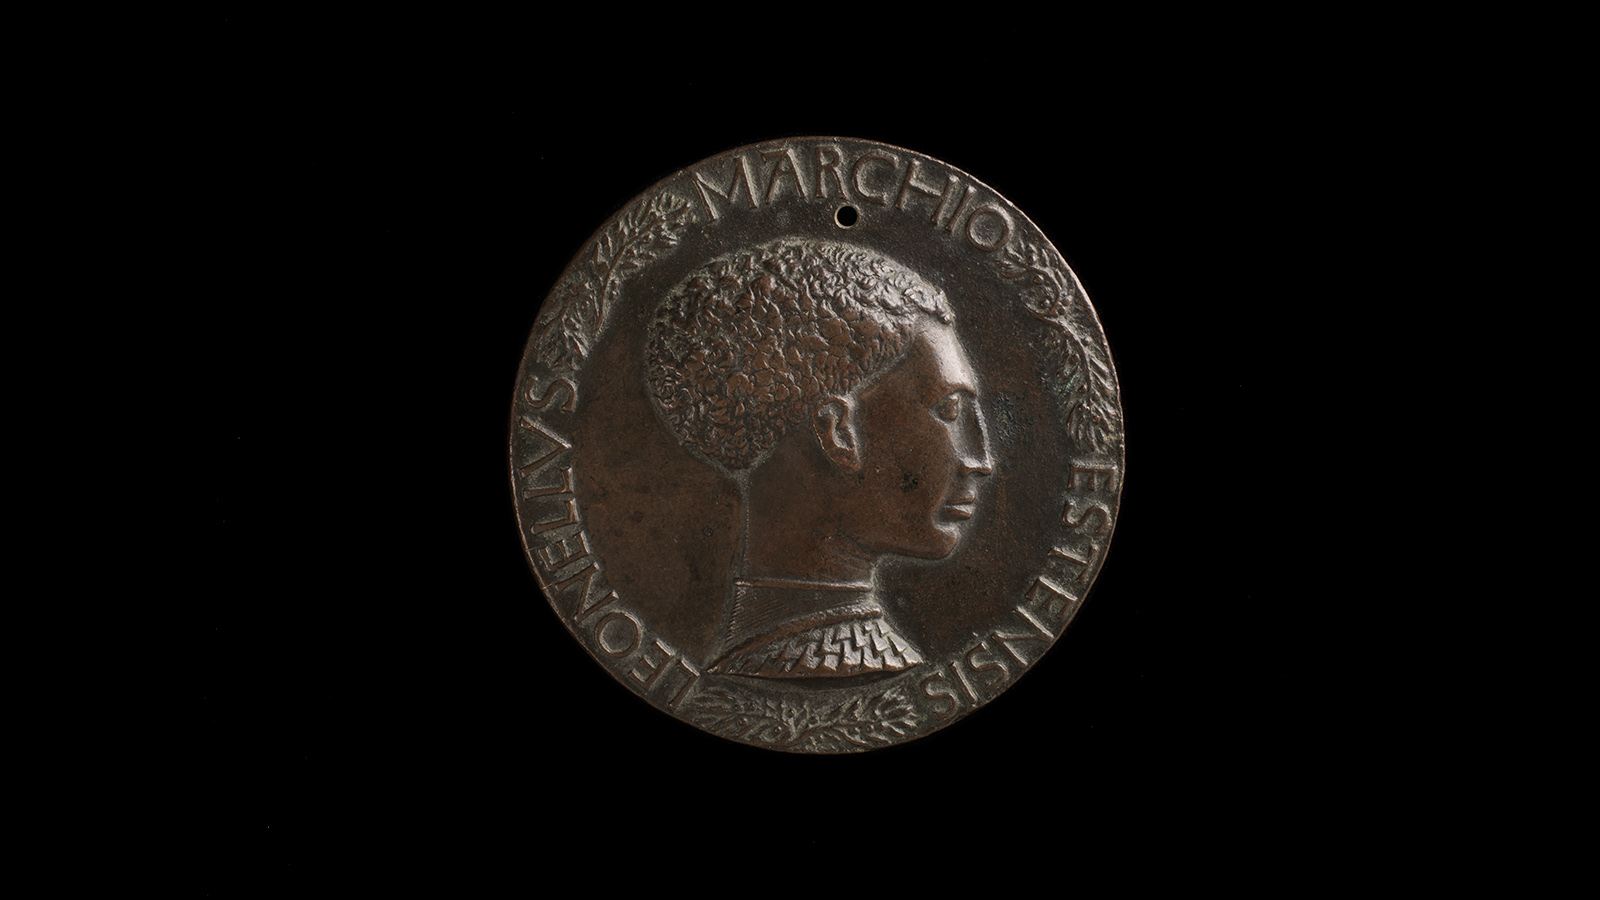 Antonio di Puccio Pisano, called Pisanello. Obverse: Leonello d’Este, Marquis of Ferrara; reverse: Head of three infantile faces. Ferrara, c. 1443. Bronze. Calouste Gulbenkian Museum